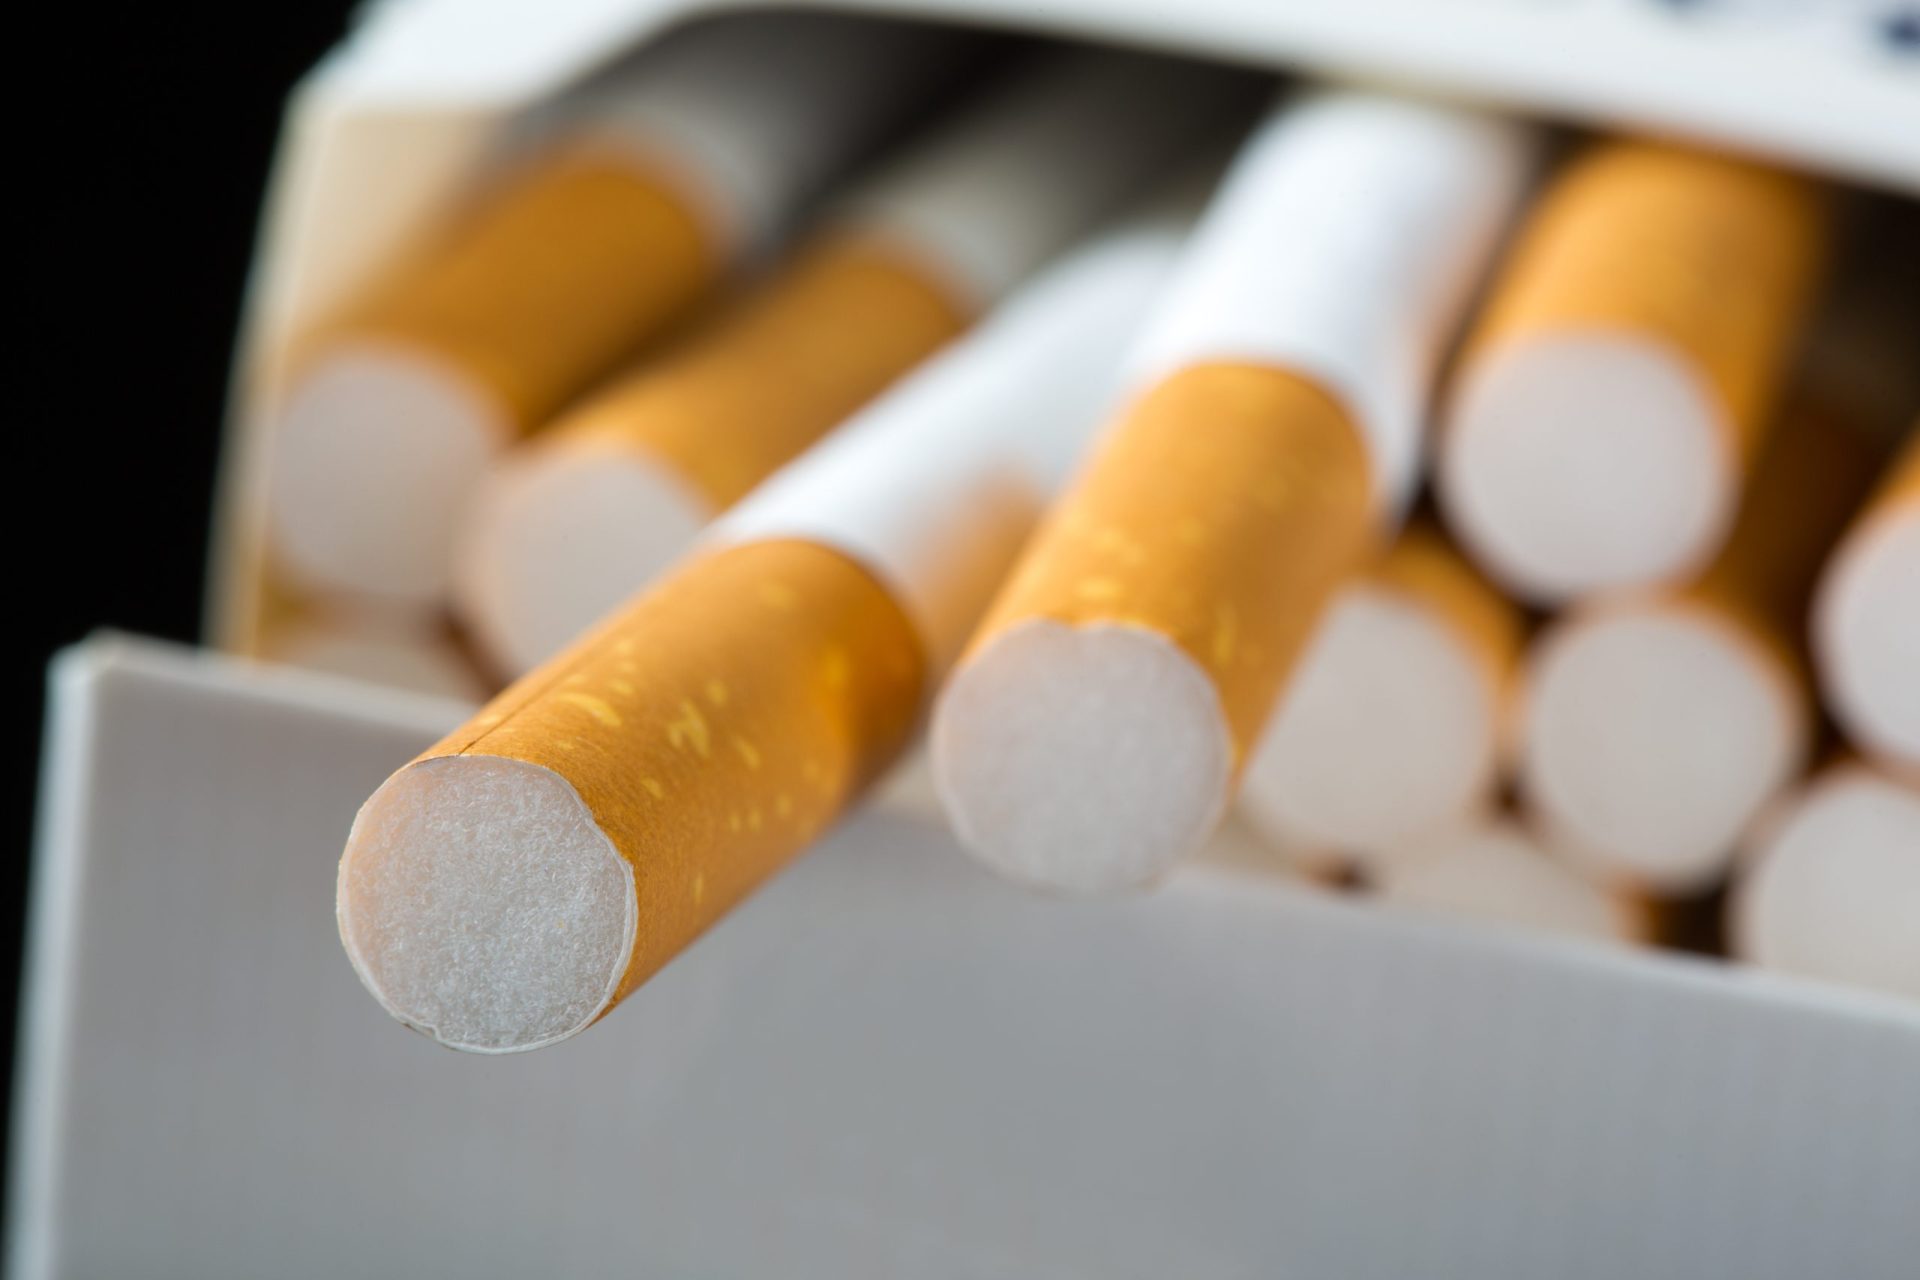 Preço do tabaco aumenta pelo menos 10 cêntimos no próximo ano